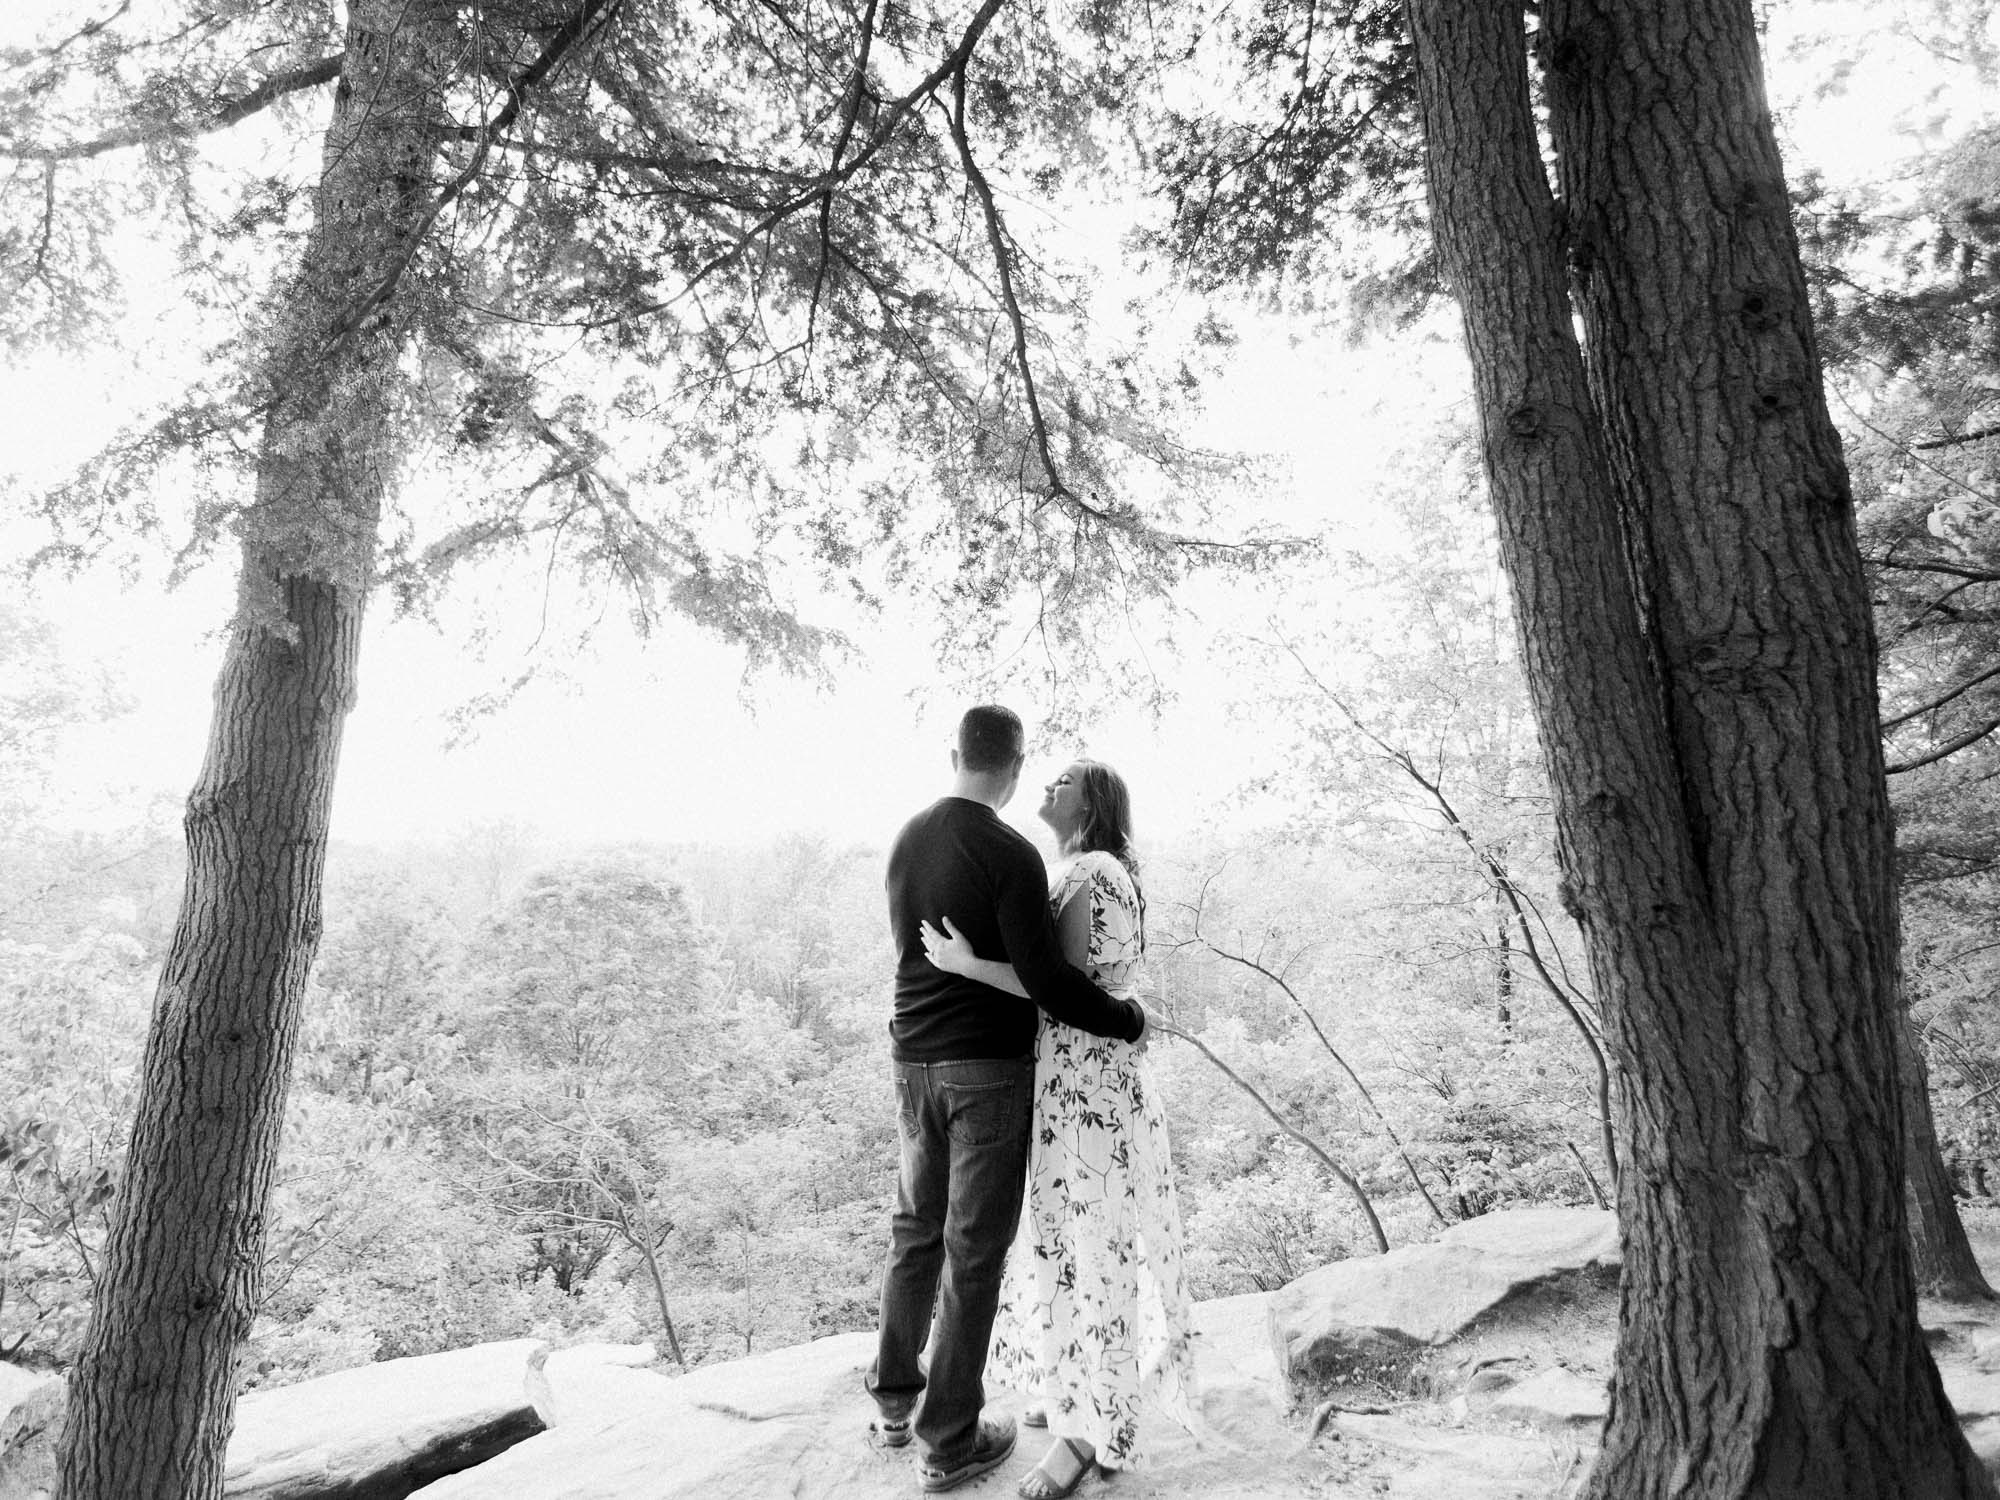 Engagement Photos in Cuyahoga Valley National Park by Cleveland Wedding Photographer Matt Erickson Photography